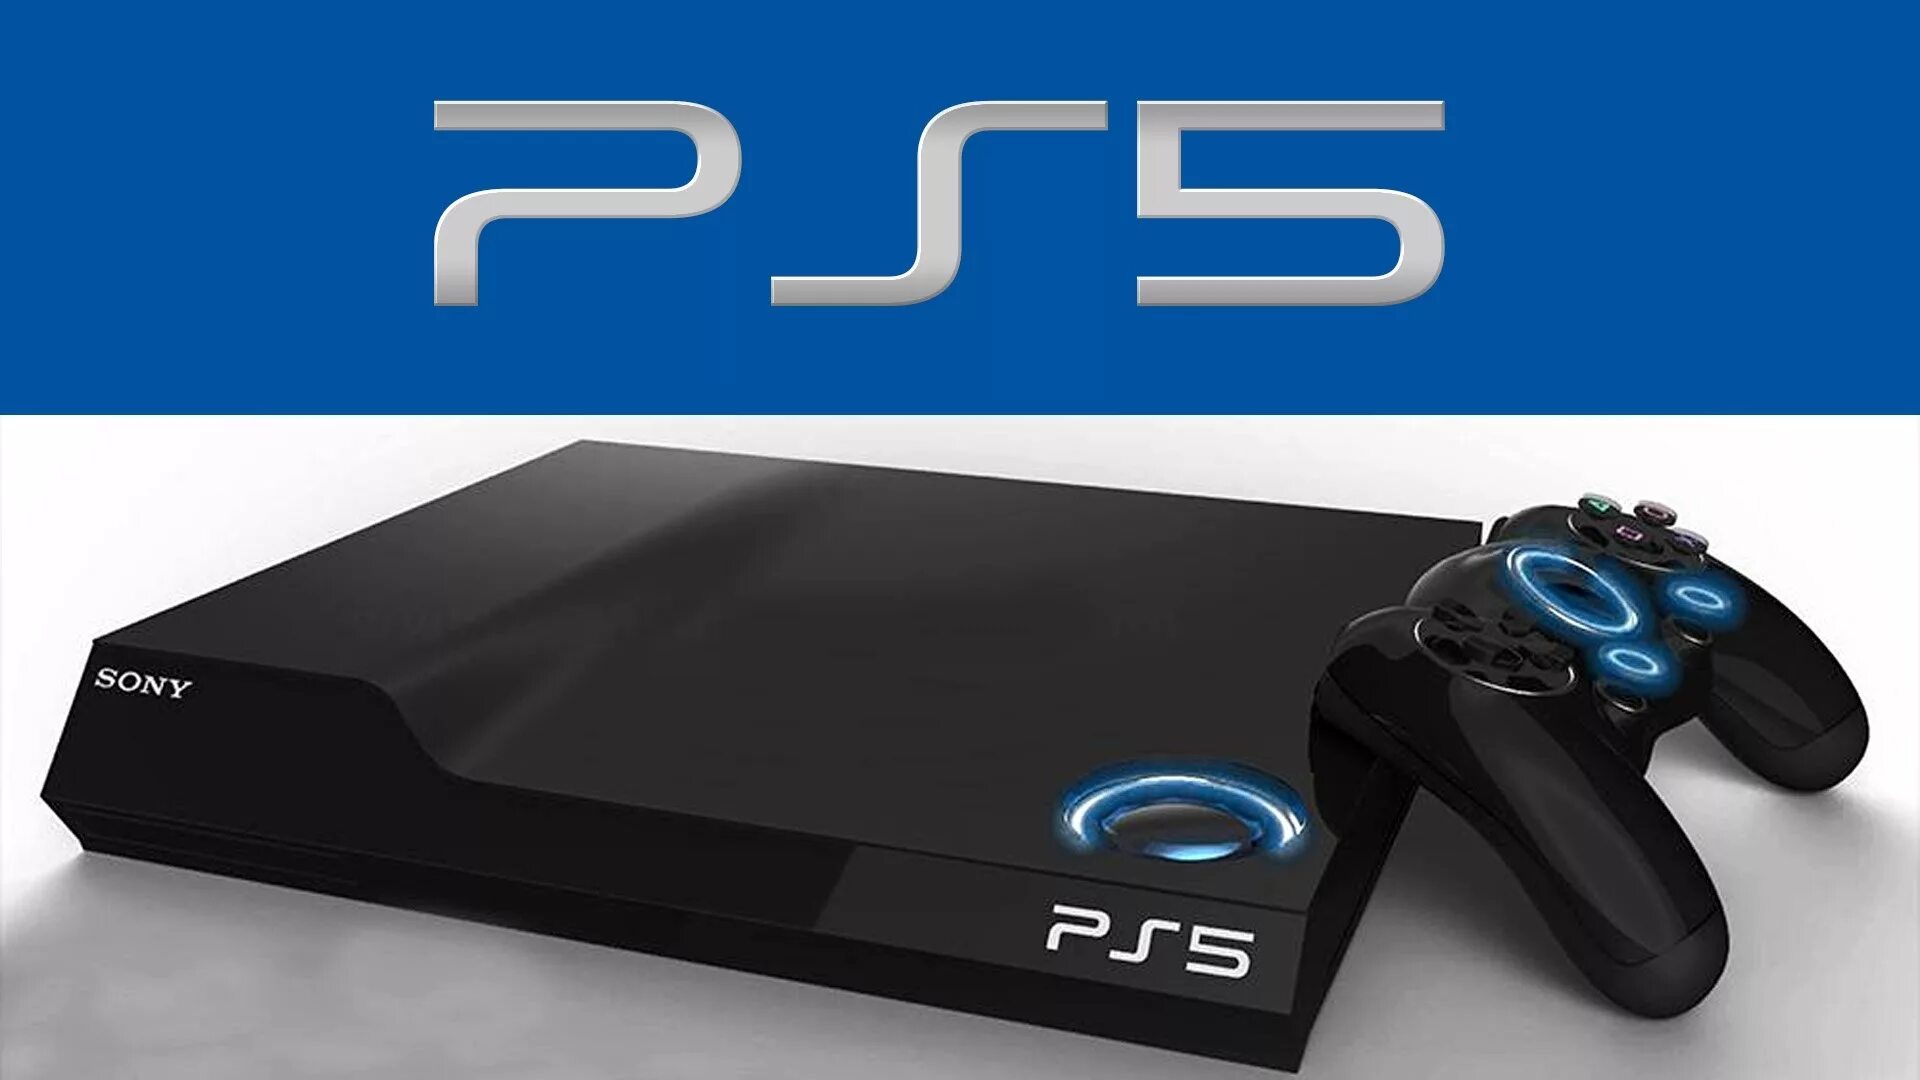 Приставка ps5. Игровая консоль Sony PLAYSTATION 5. Ps5 Console Sony. Sony PLAYSTATION 5. PS 5. Playstation 5 cfi 2016a